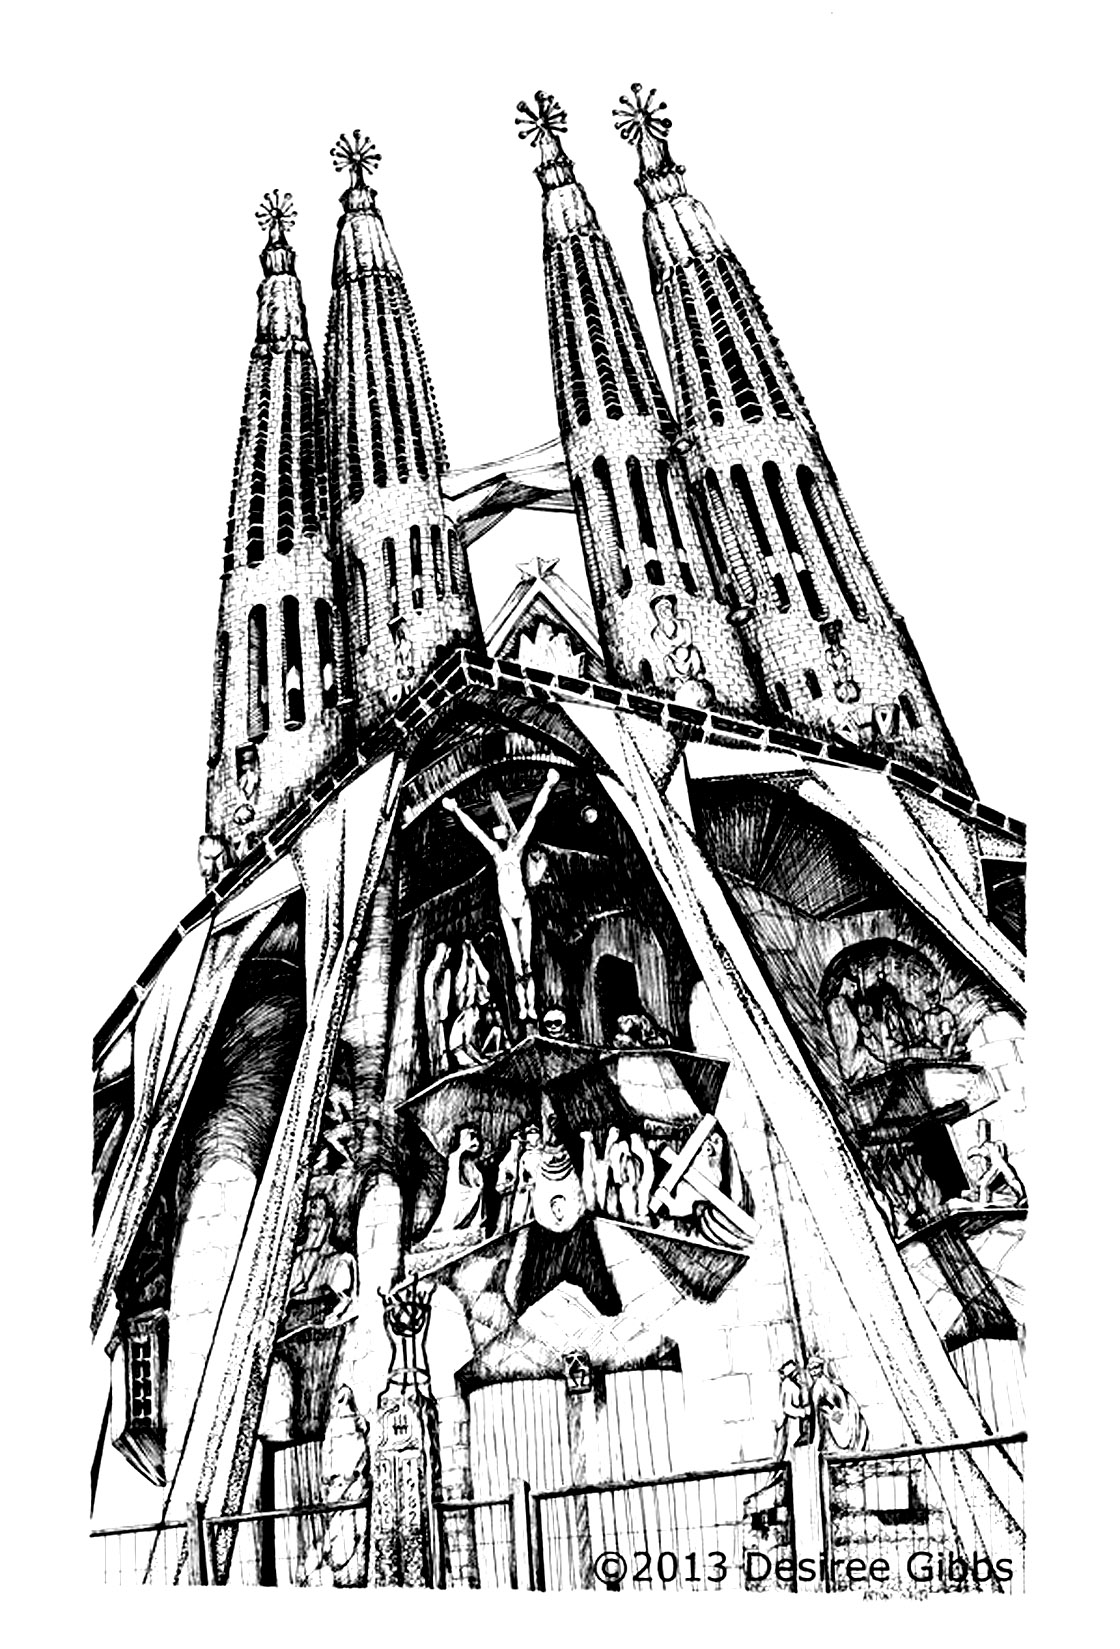 Drawing of the Sagrada familia by Gaudi in Barcelona